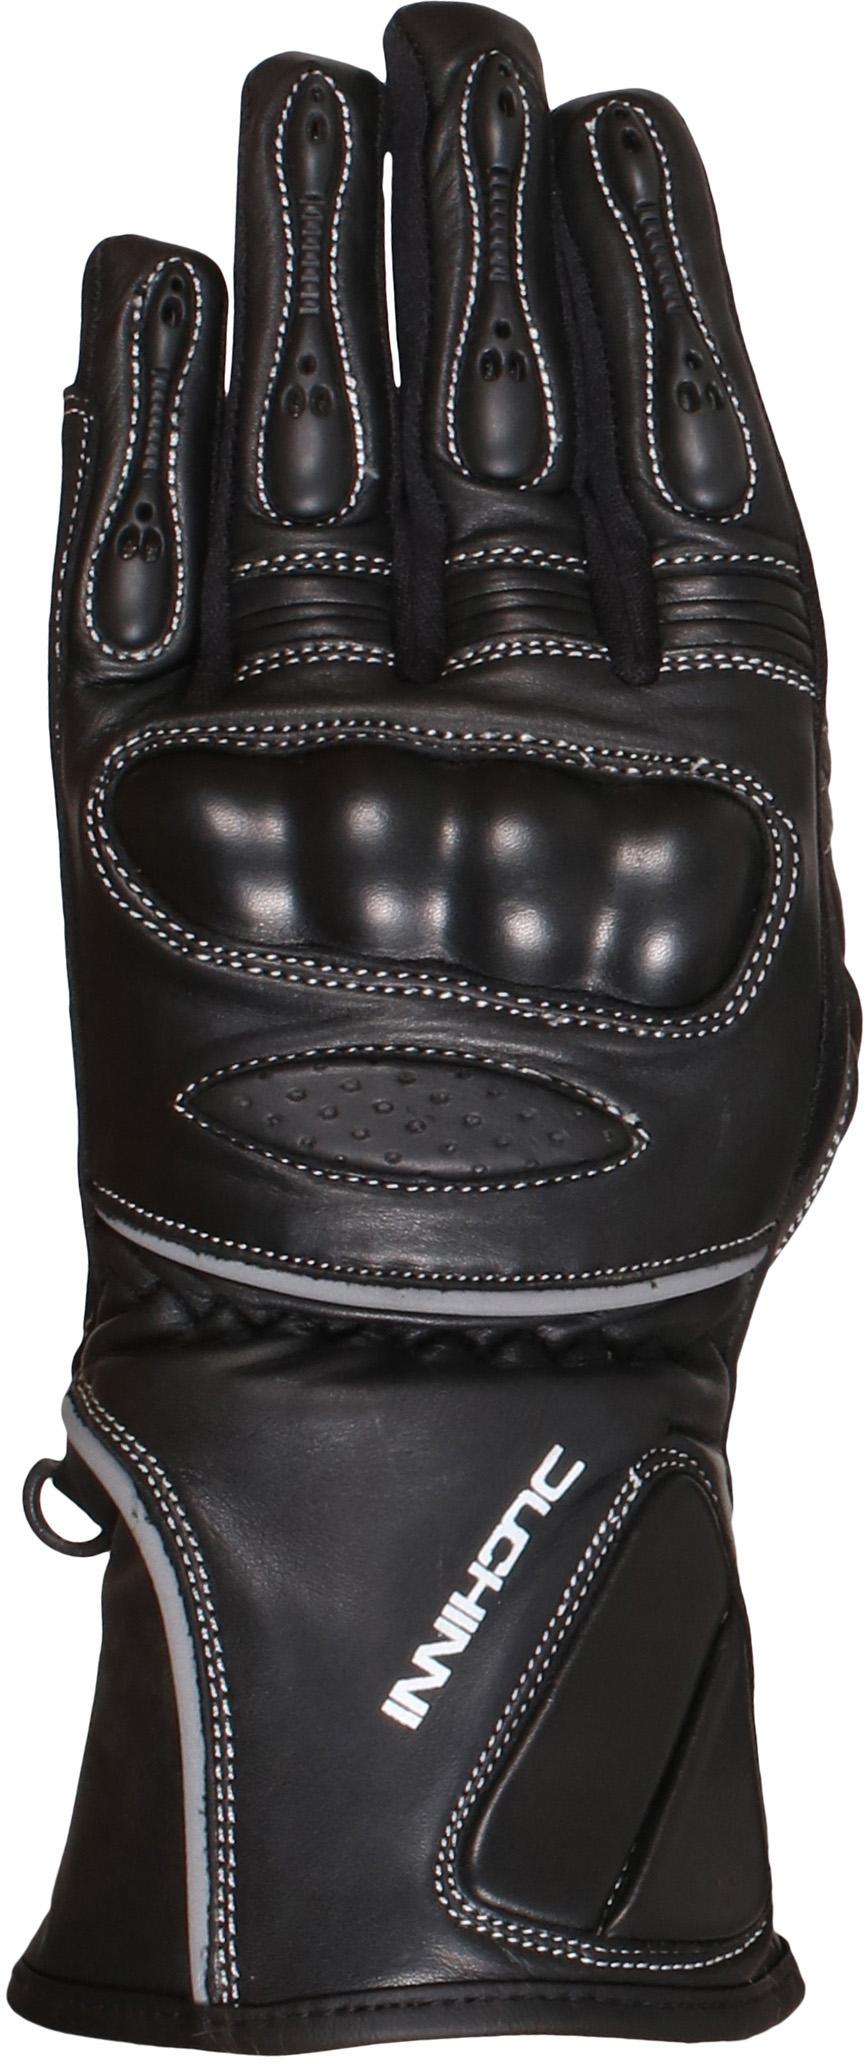 Duchinni Como Motorcycle Gloves - Black, S